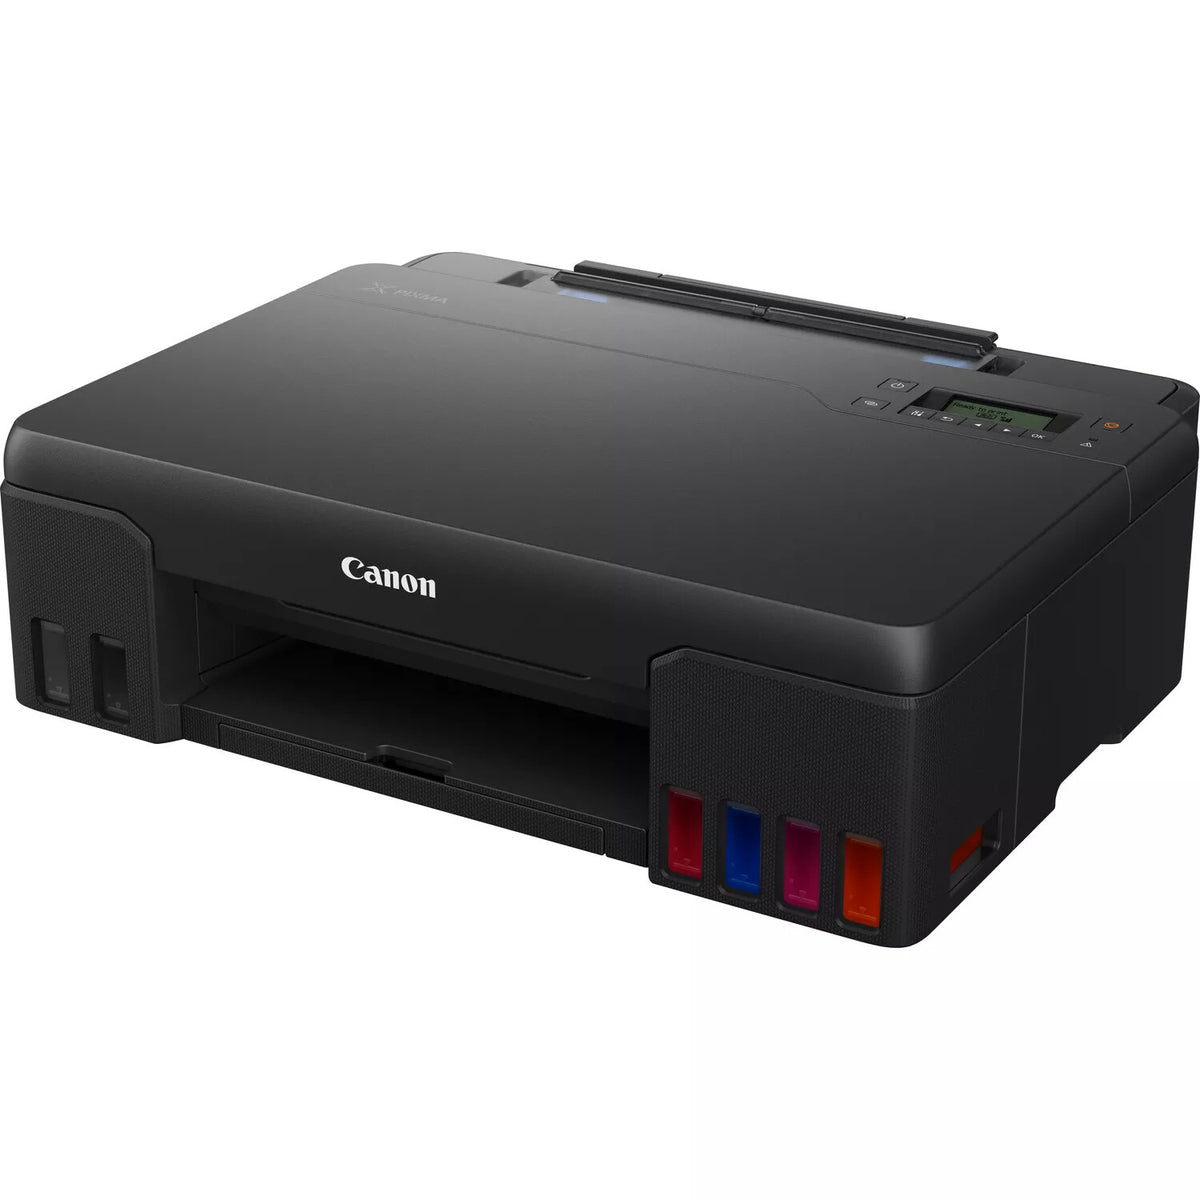 Canon PIXMA G550 - Wi-Fi Inkjet Photo Printer